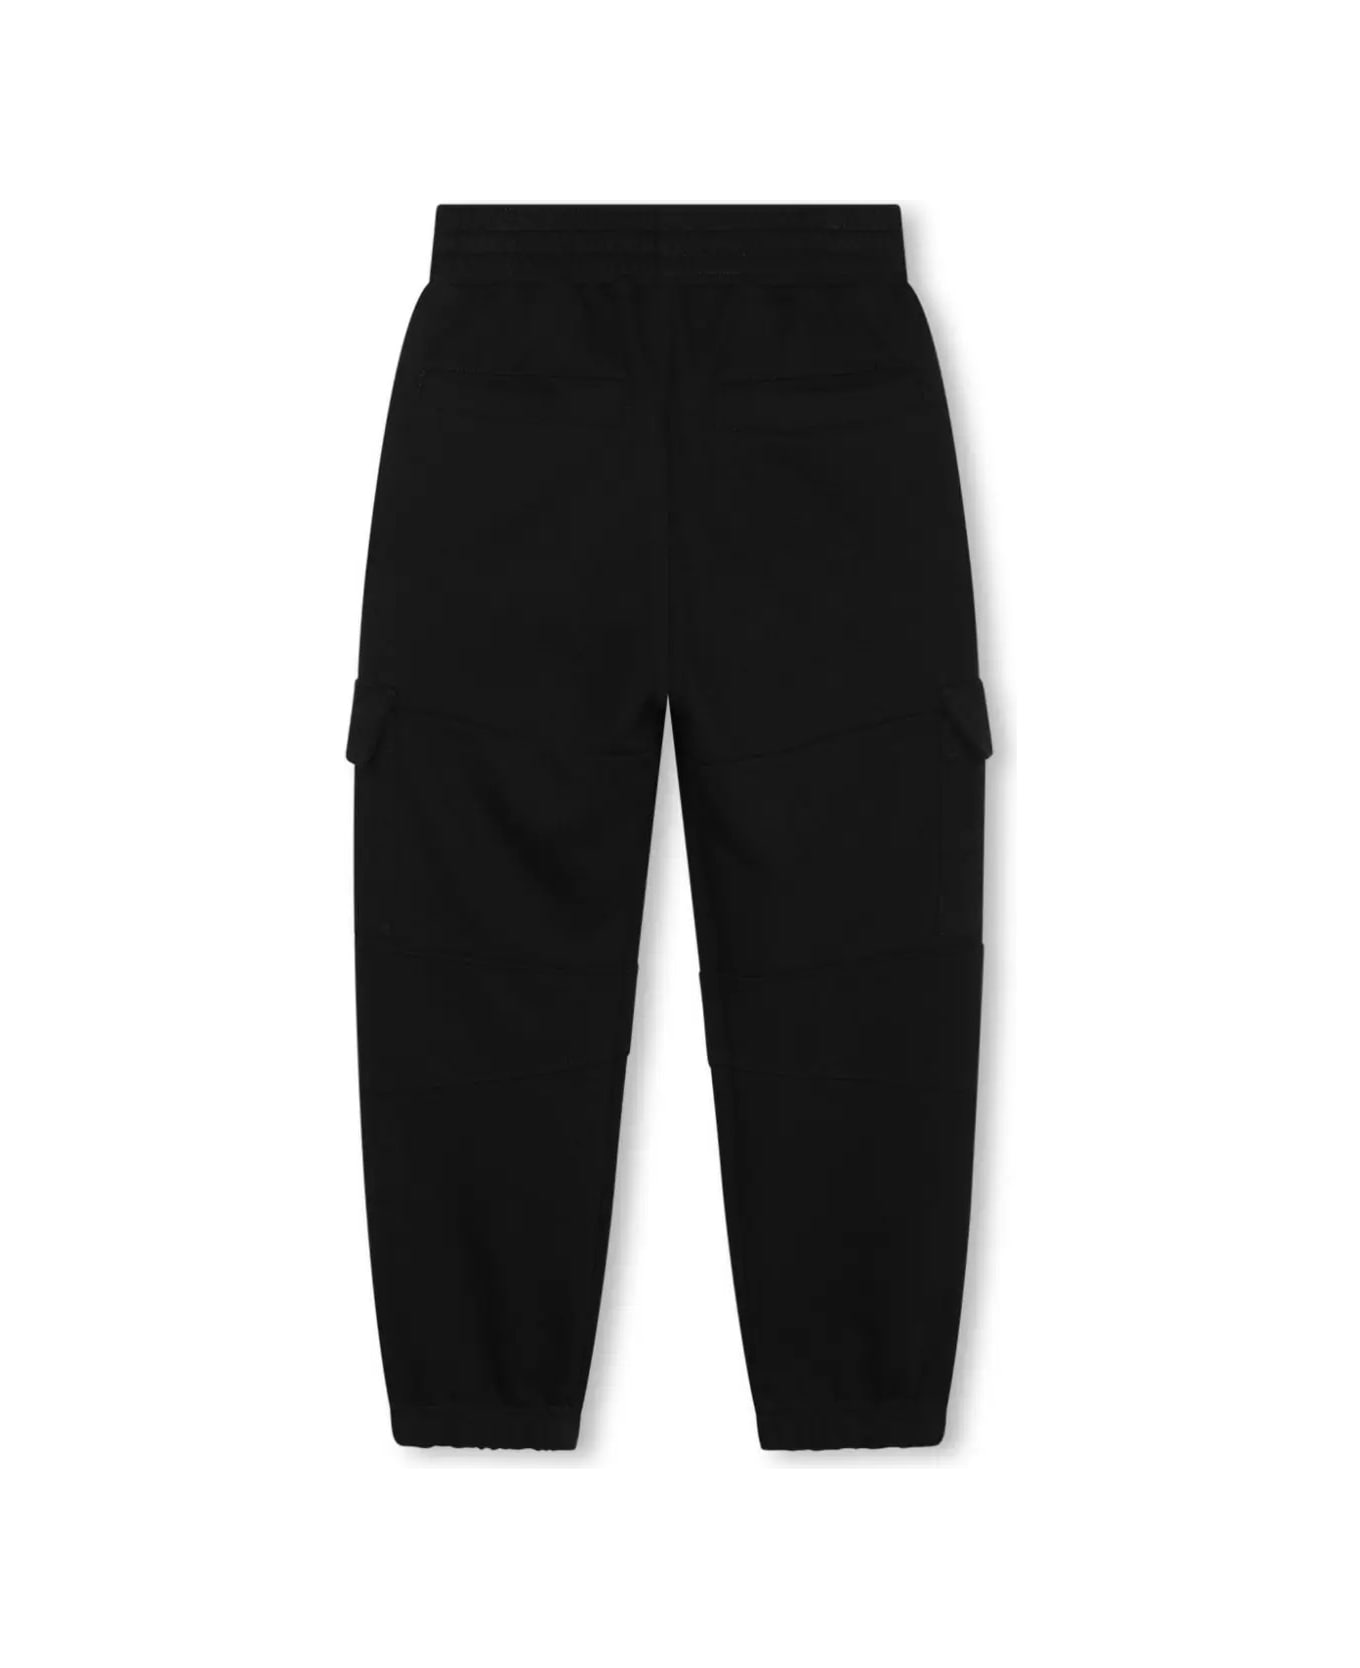 Givenchy Black Cargo Style Sports Pants - Black